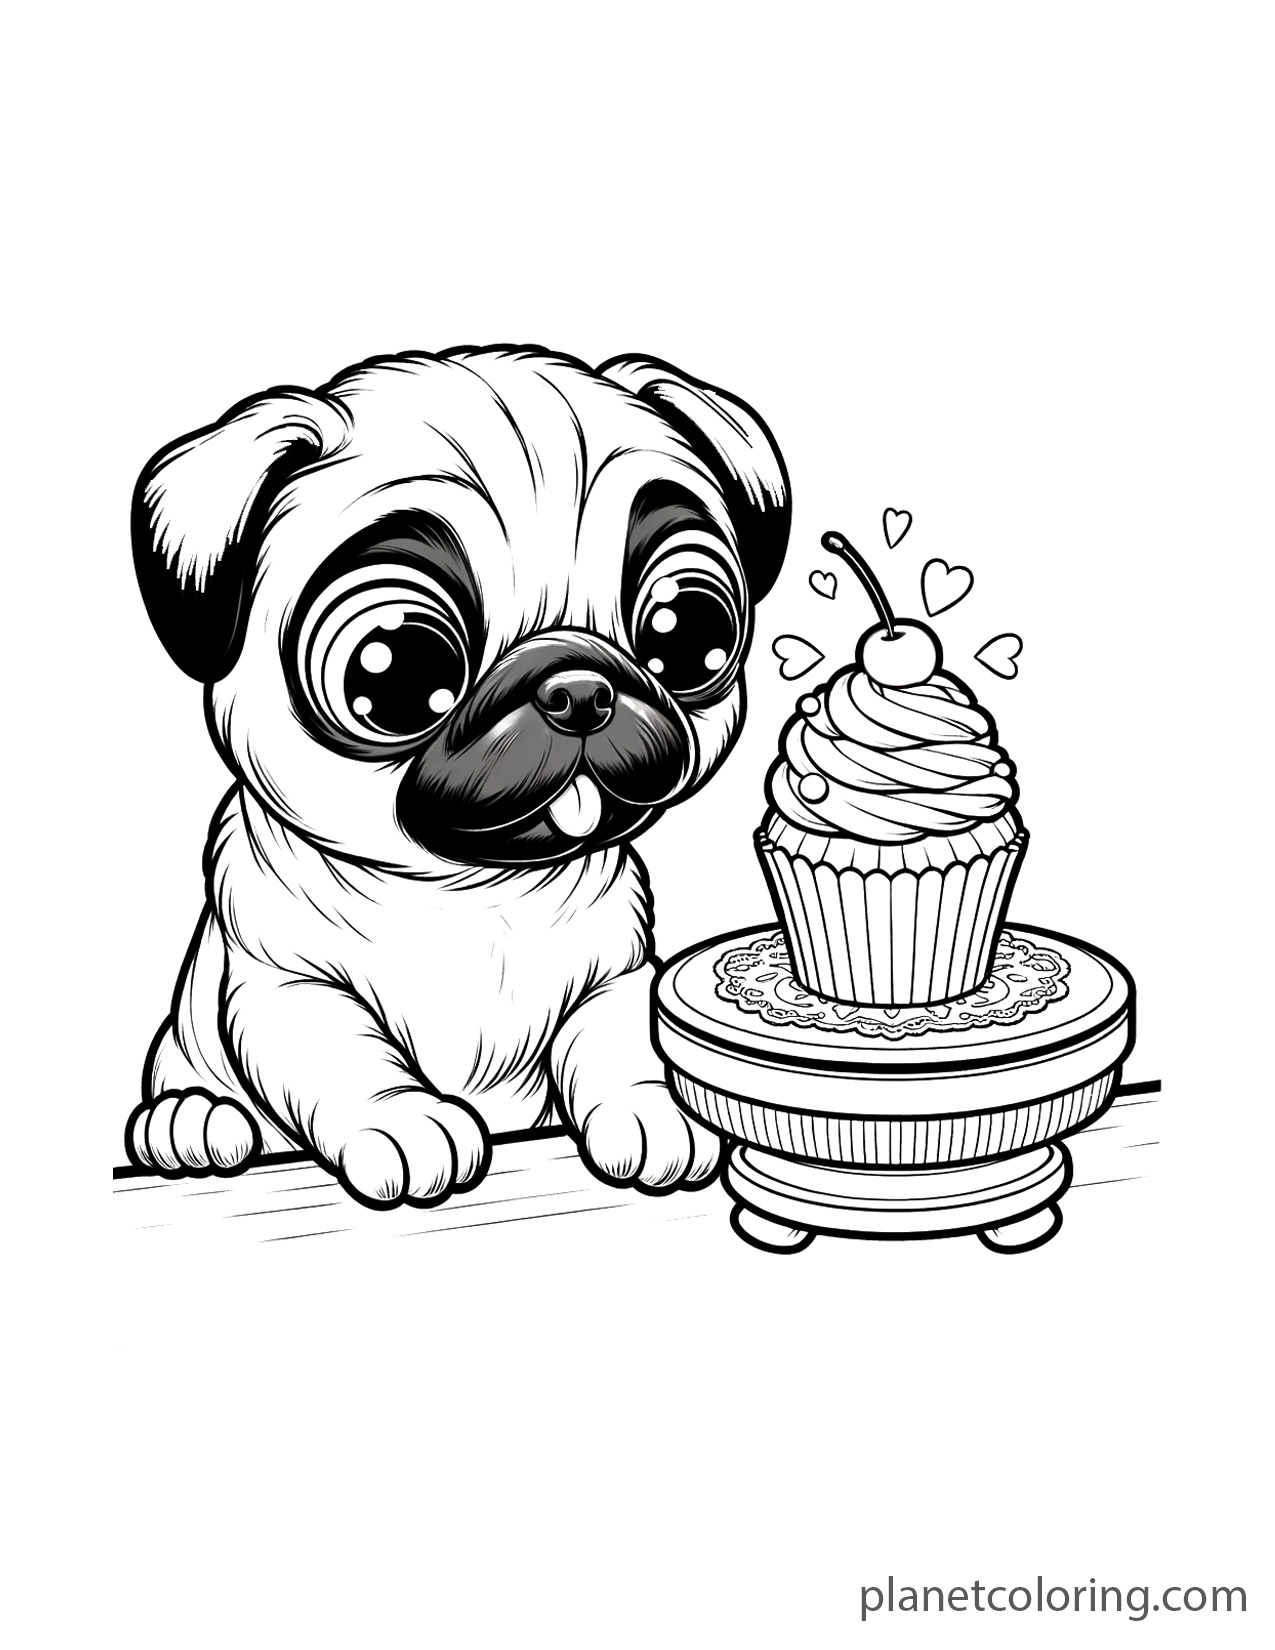 Pug with a cupcake